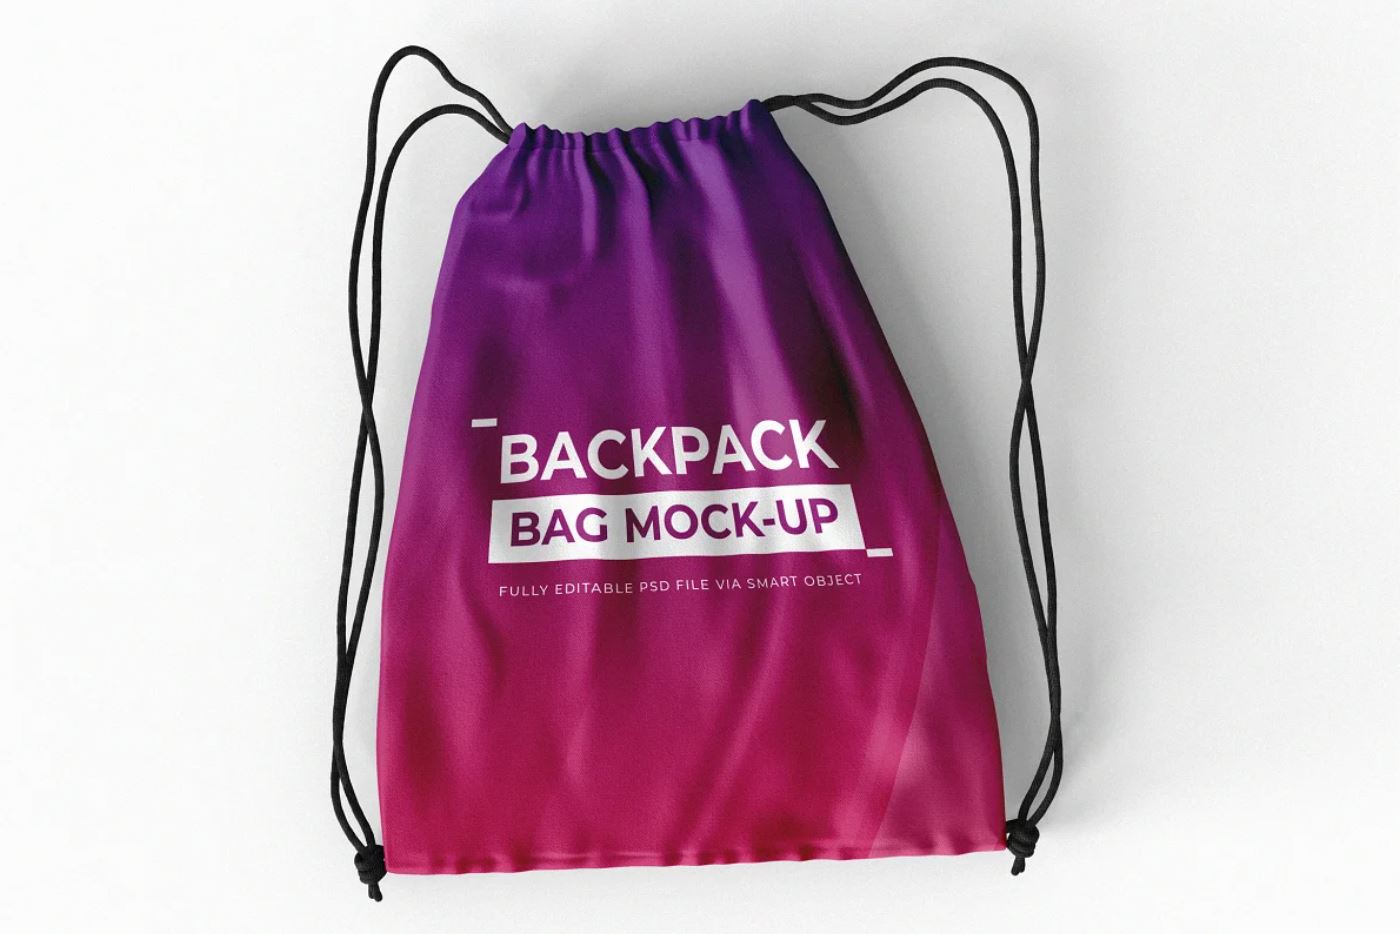 Backpack-mockup-psd-free-download